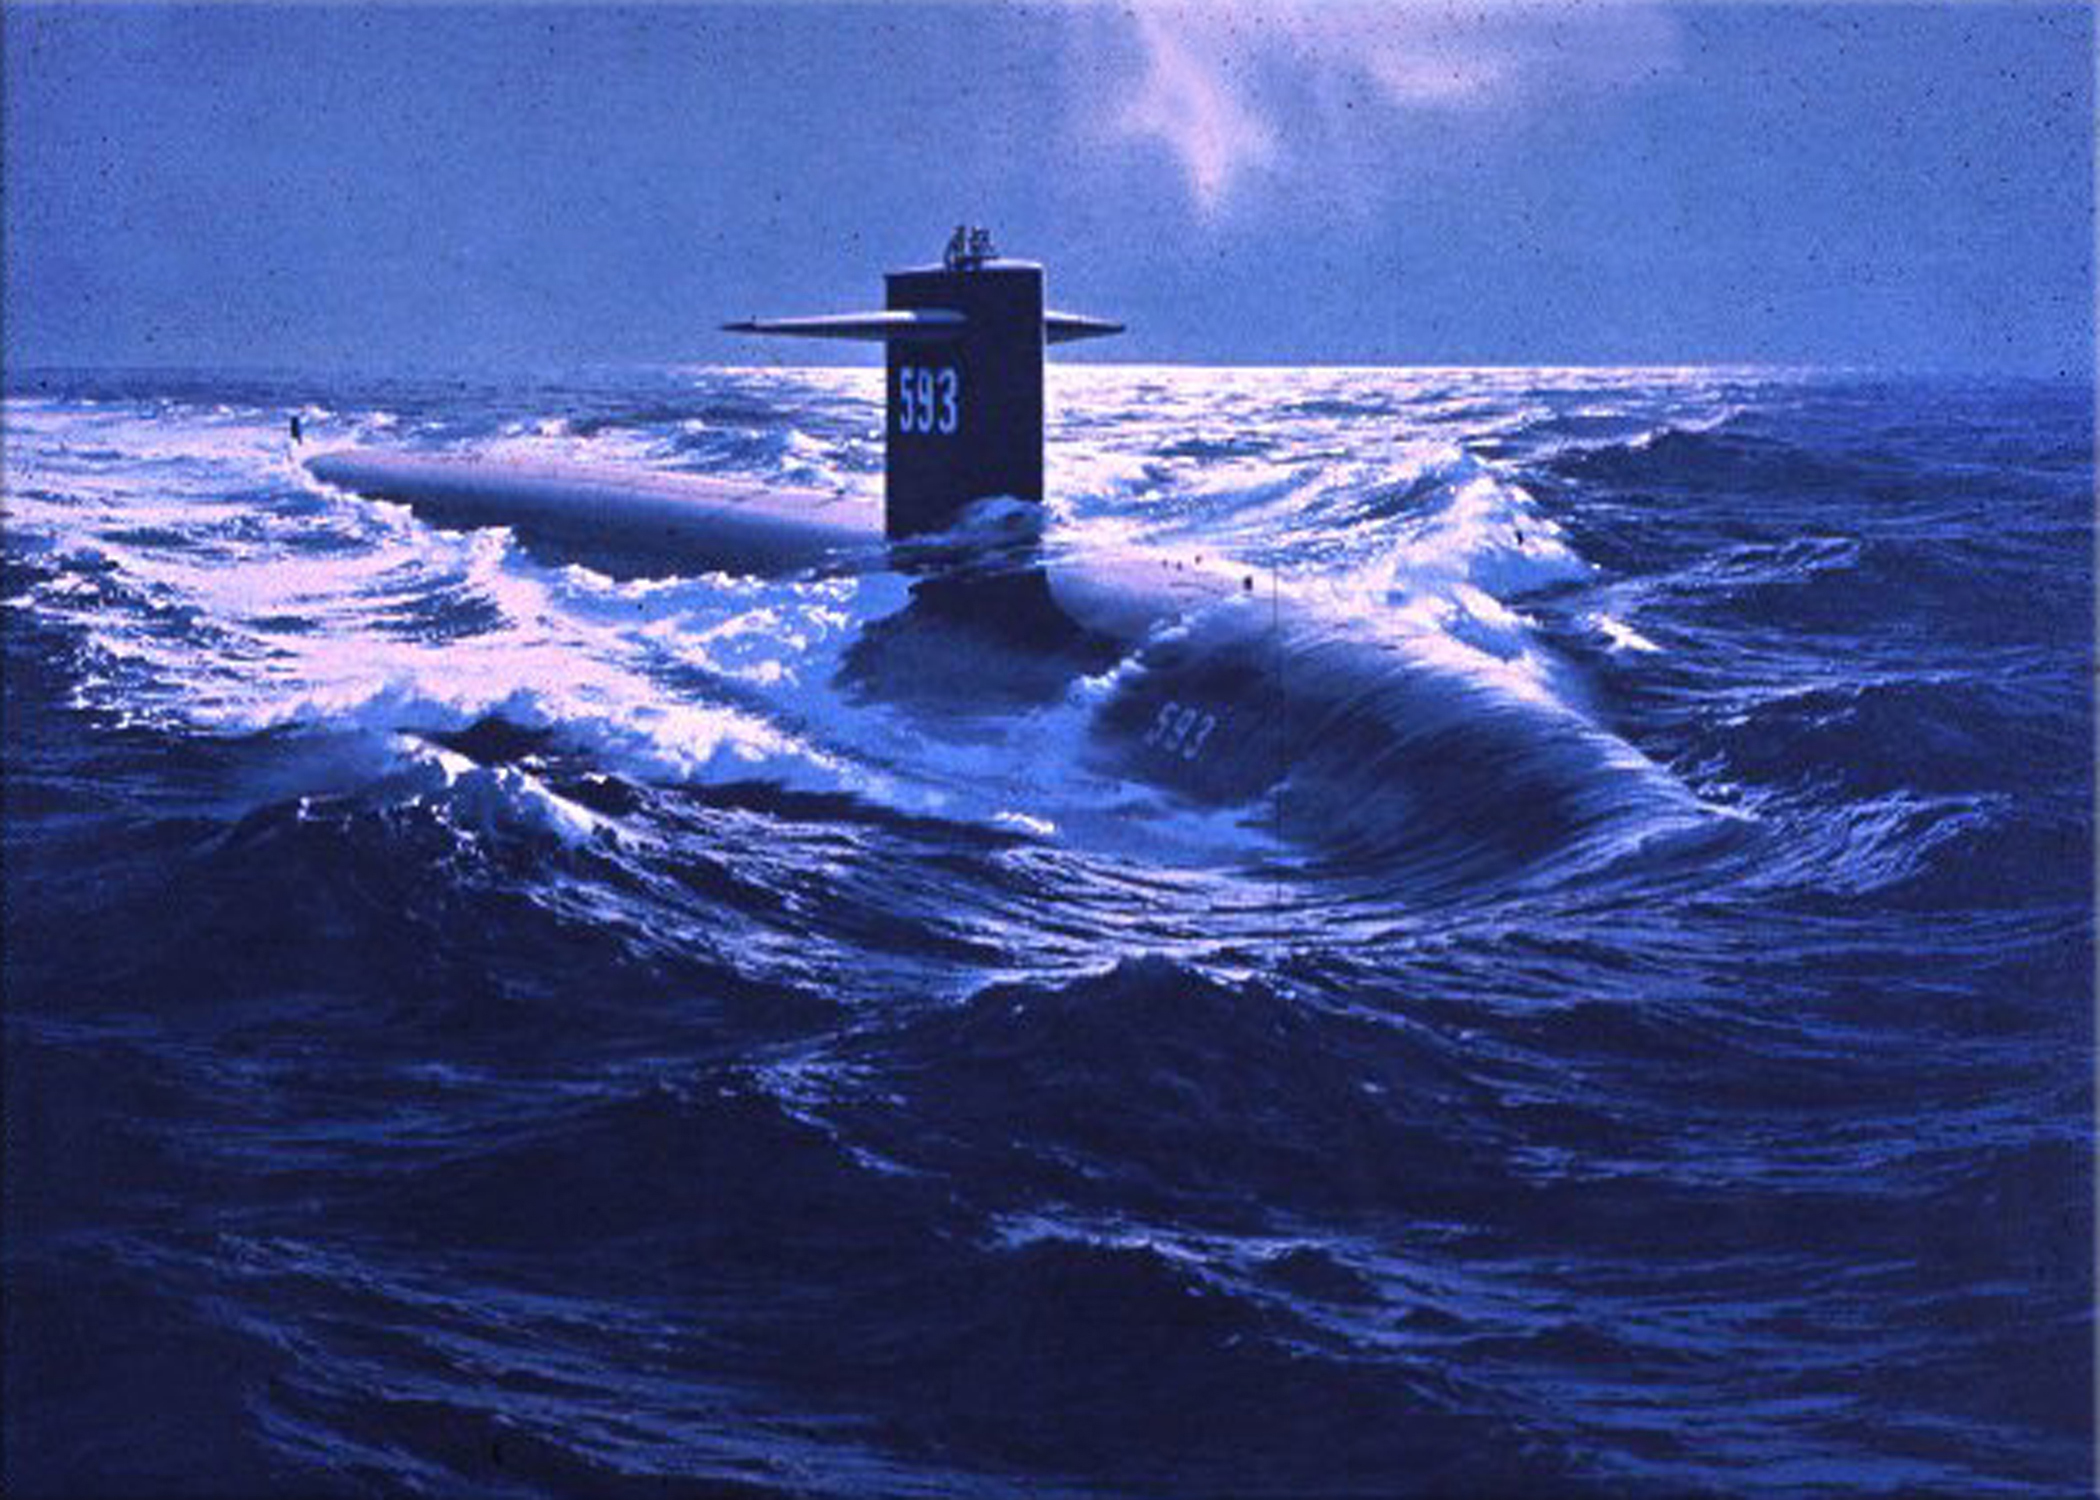 129 American sailors die when the submarine USS Thresher sinks at sea